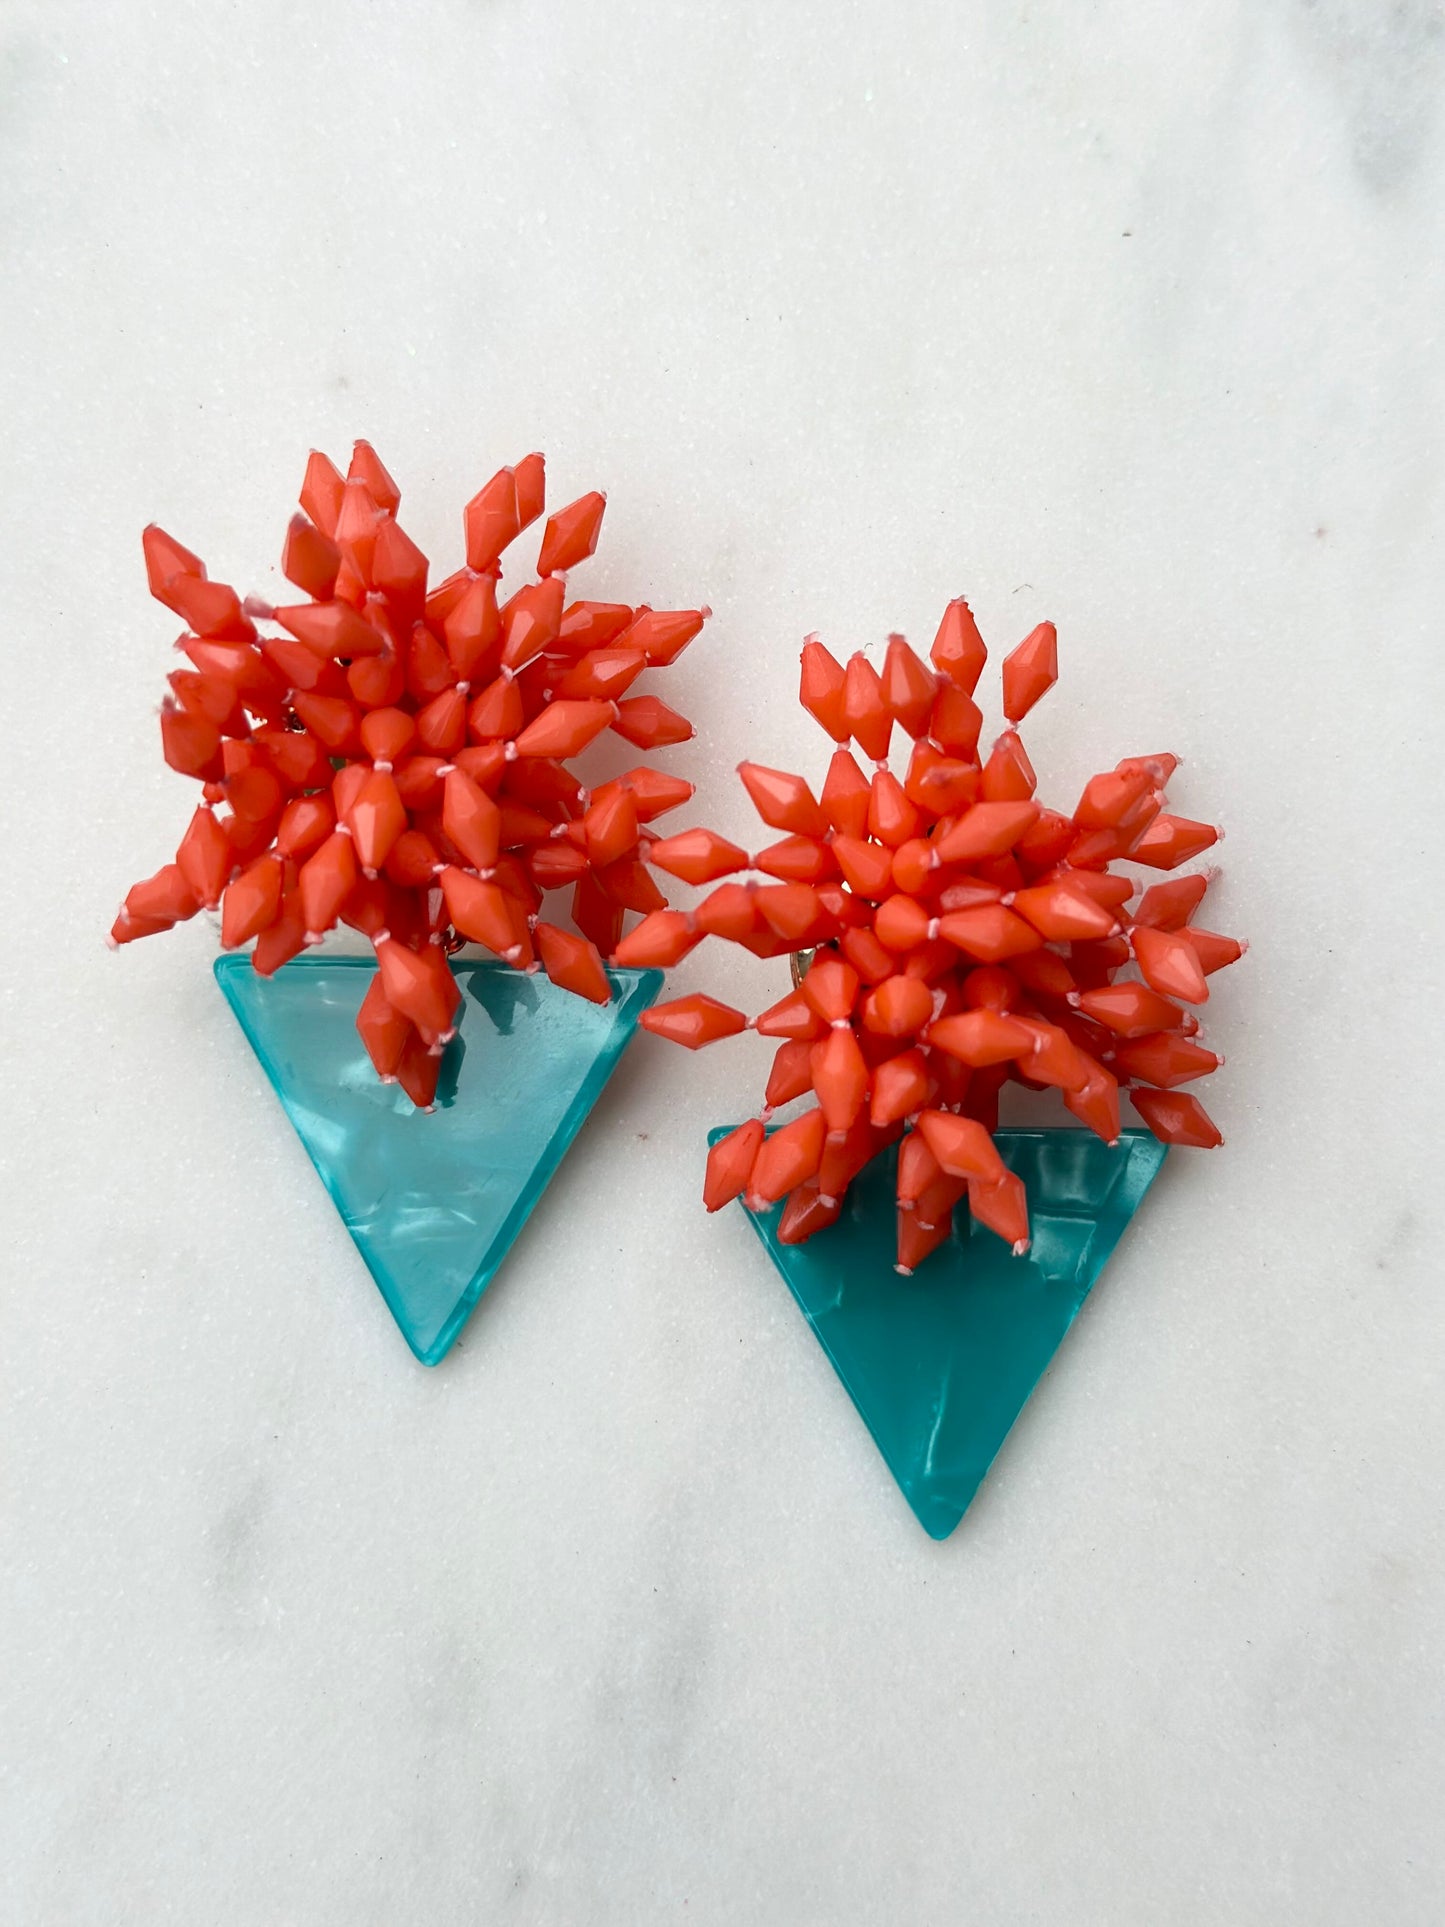 pom pom triangle acrylic earrings